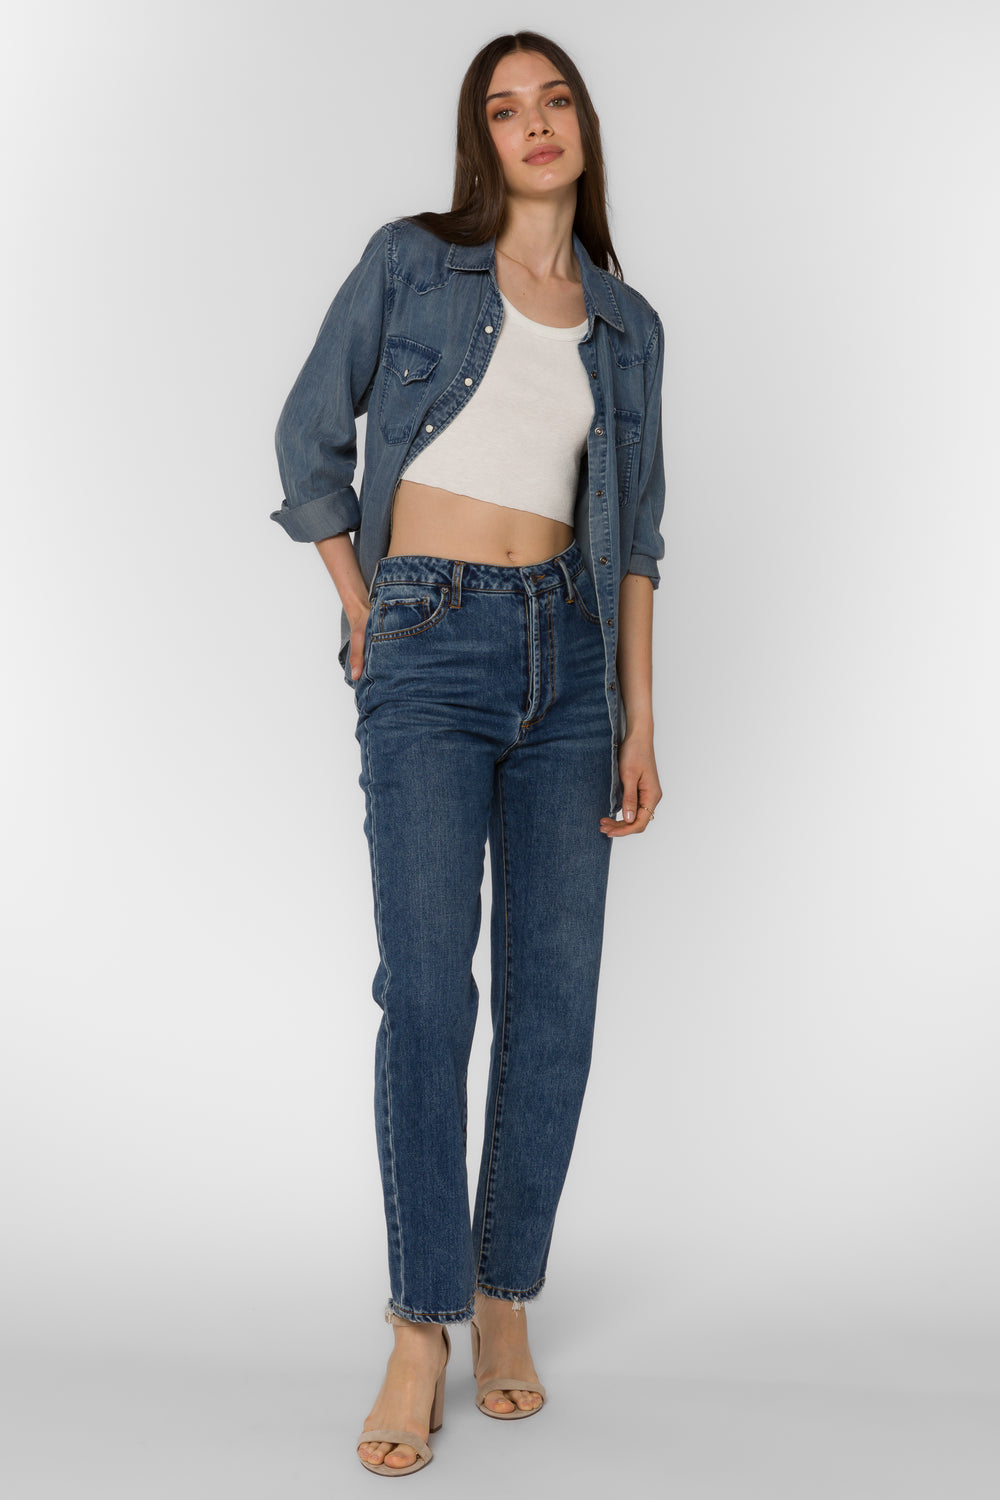 Raquel Malibu Blue Shirt - Tops - Velvet Heart Clothing